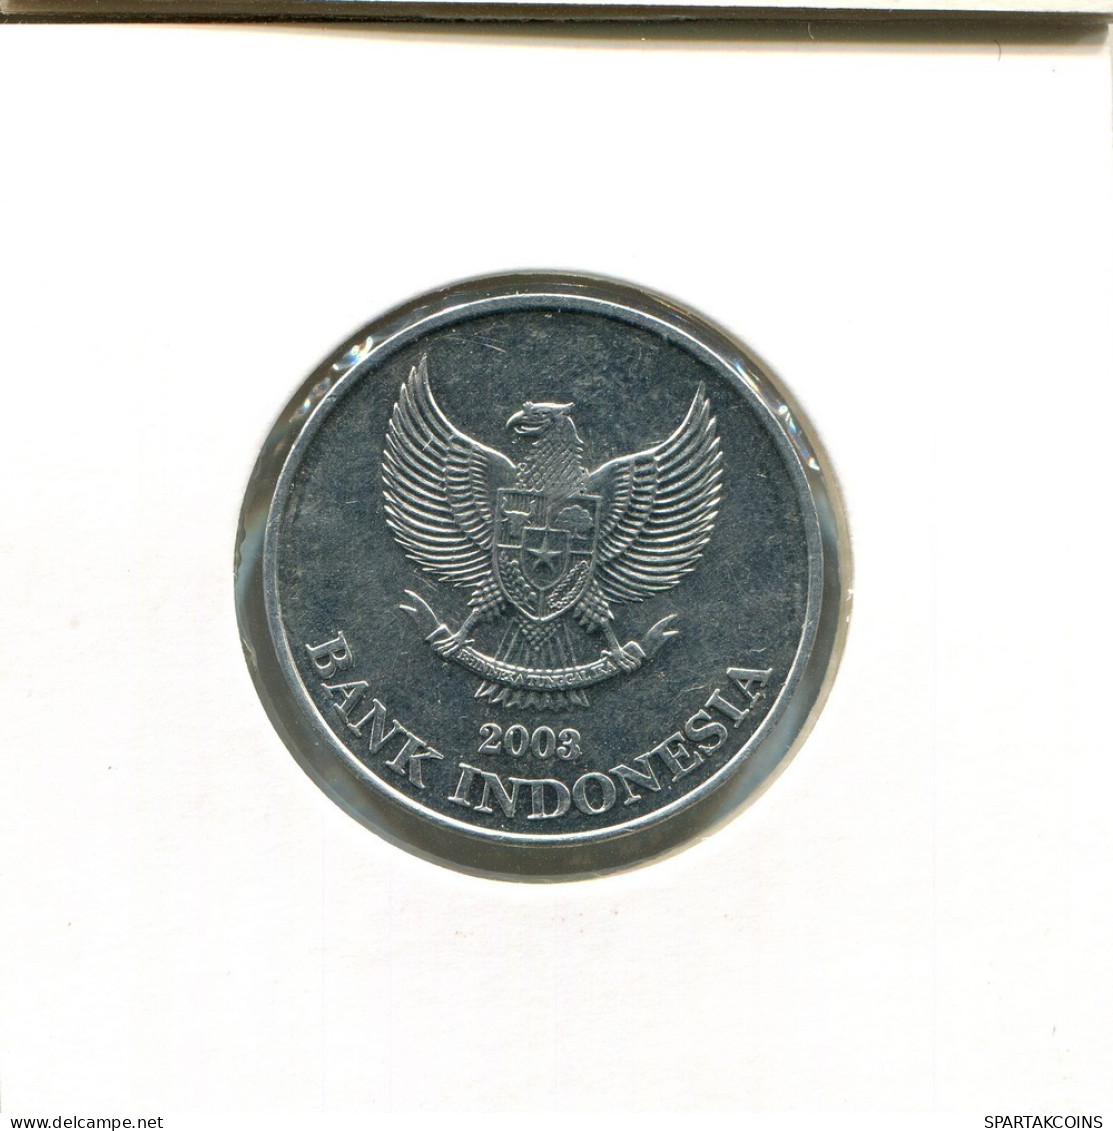 200 RUPIAH 2003 INDONESIA Moneda #BA112.E.A - Indonesia